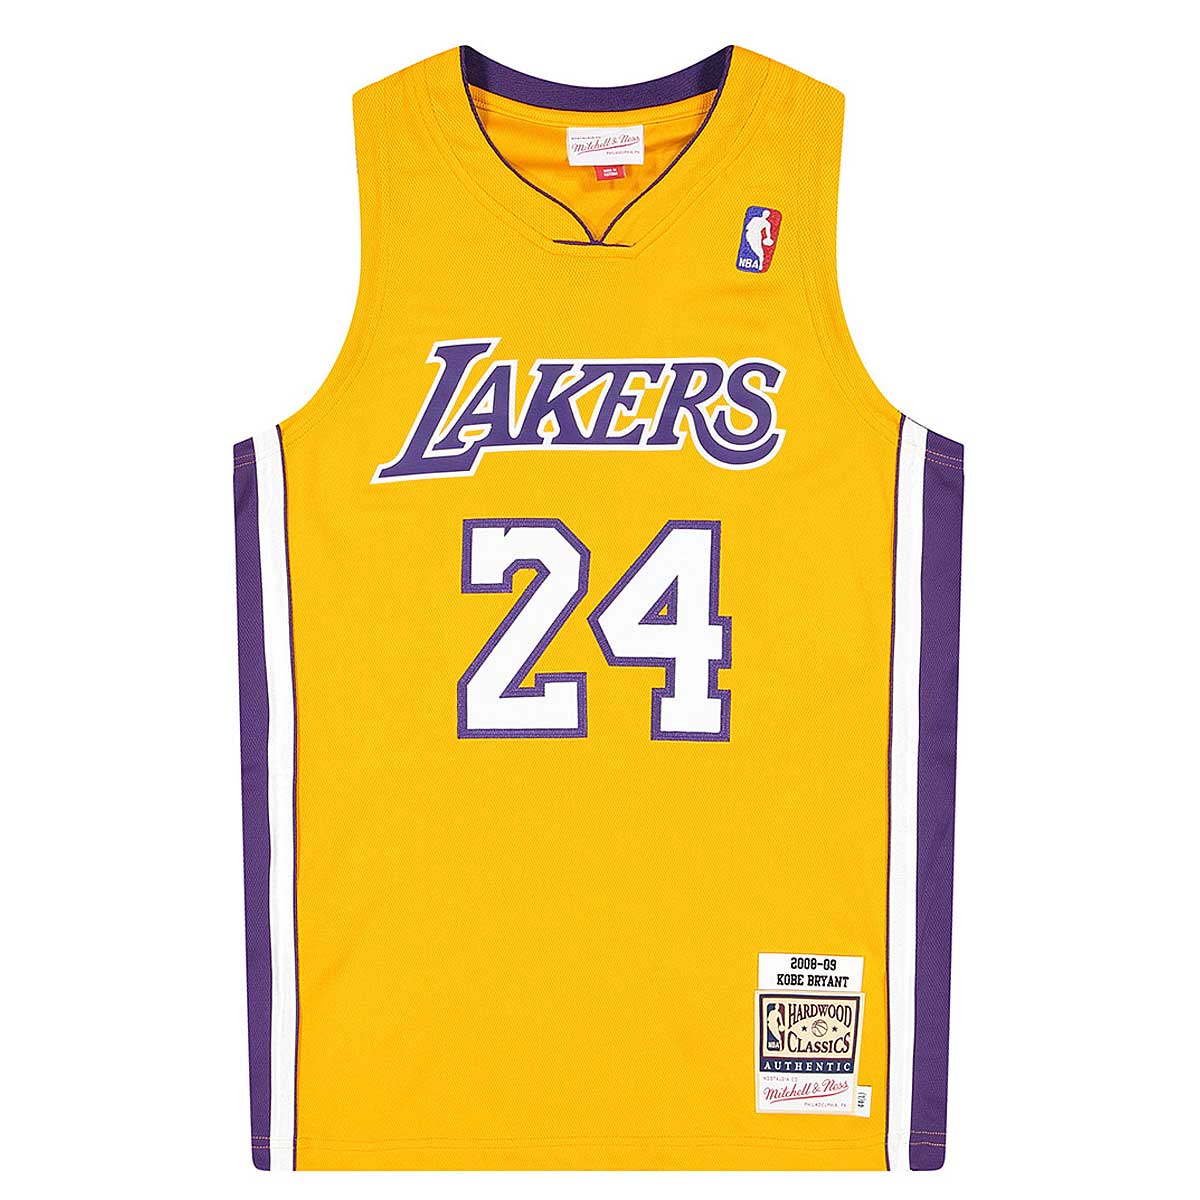 SIZE 2XL - Reebok NBA Los Angeles Lakers Gold Tear Away Warm Up Pants